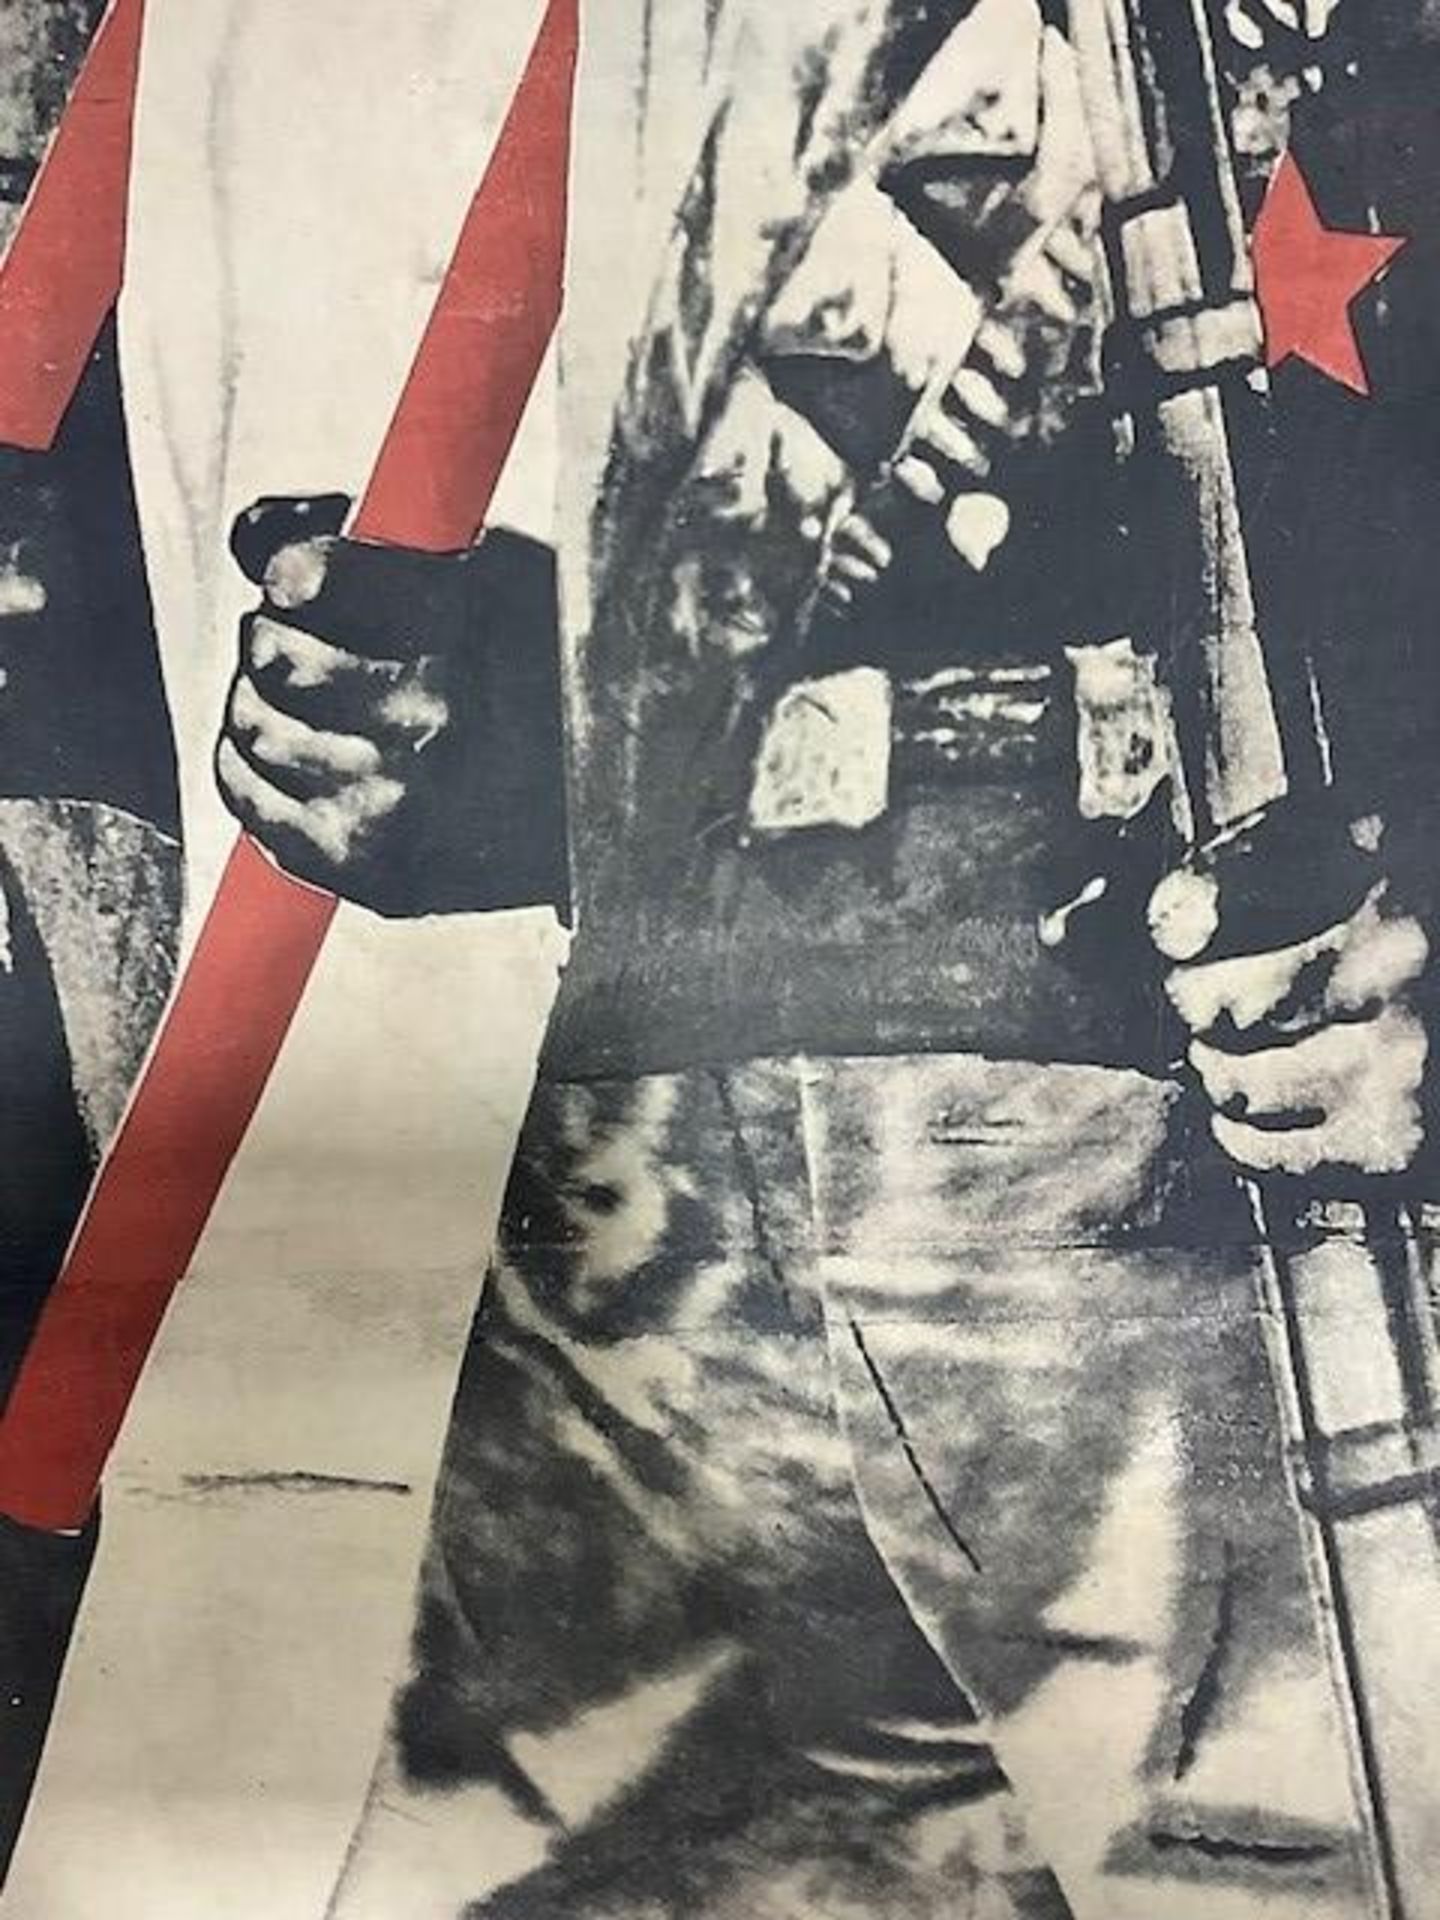 USSR Sovit Union Propaganda Poster - Image 3 of 11